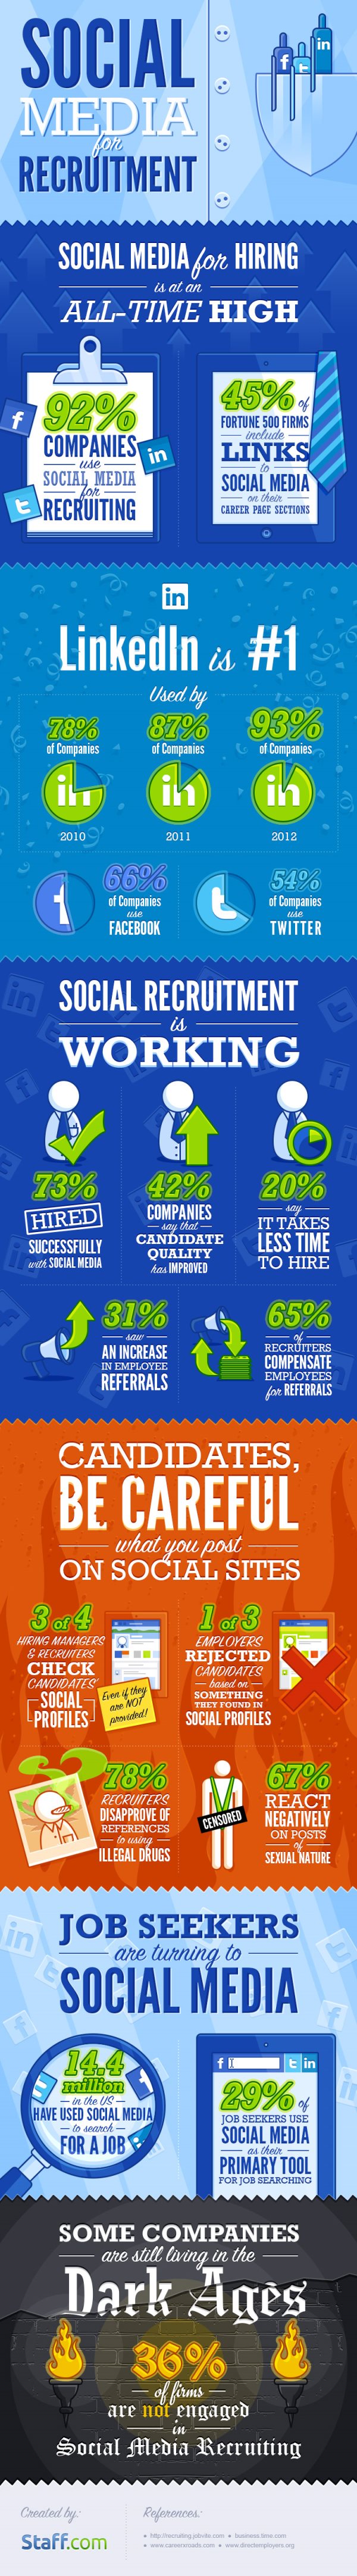 Social-media-recruitment infographic